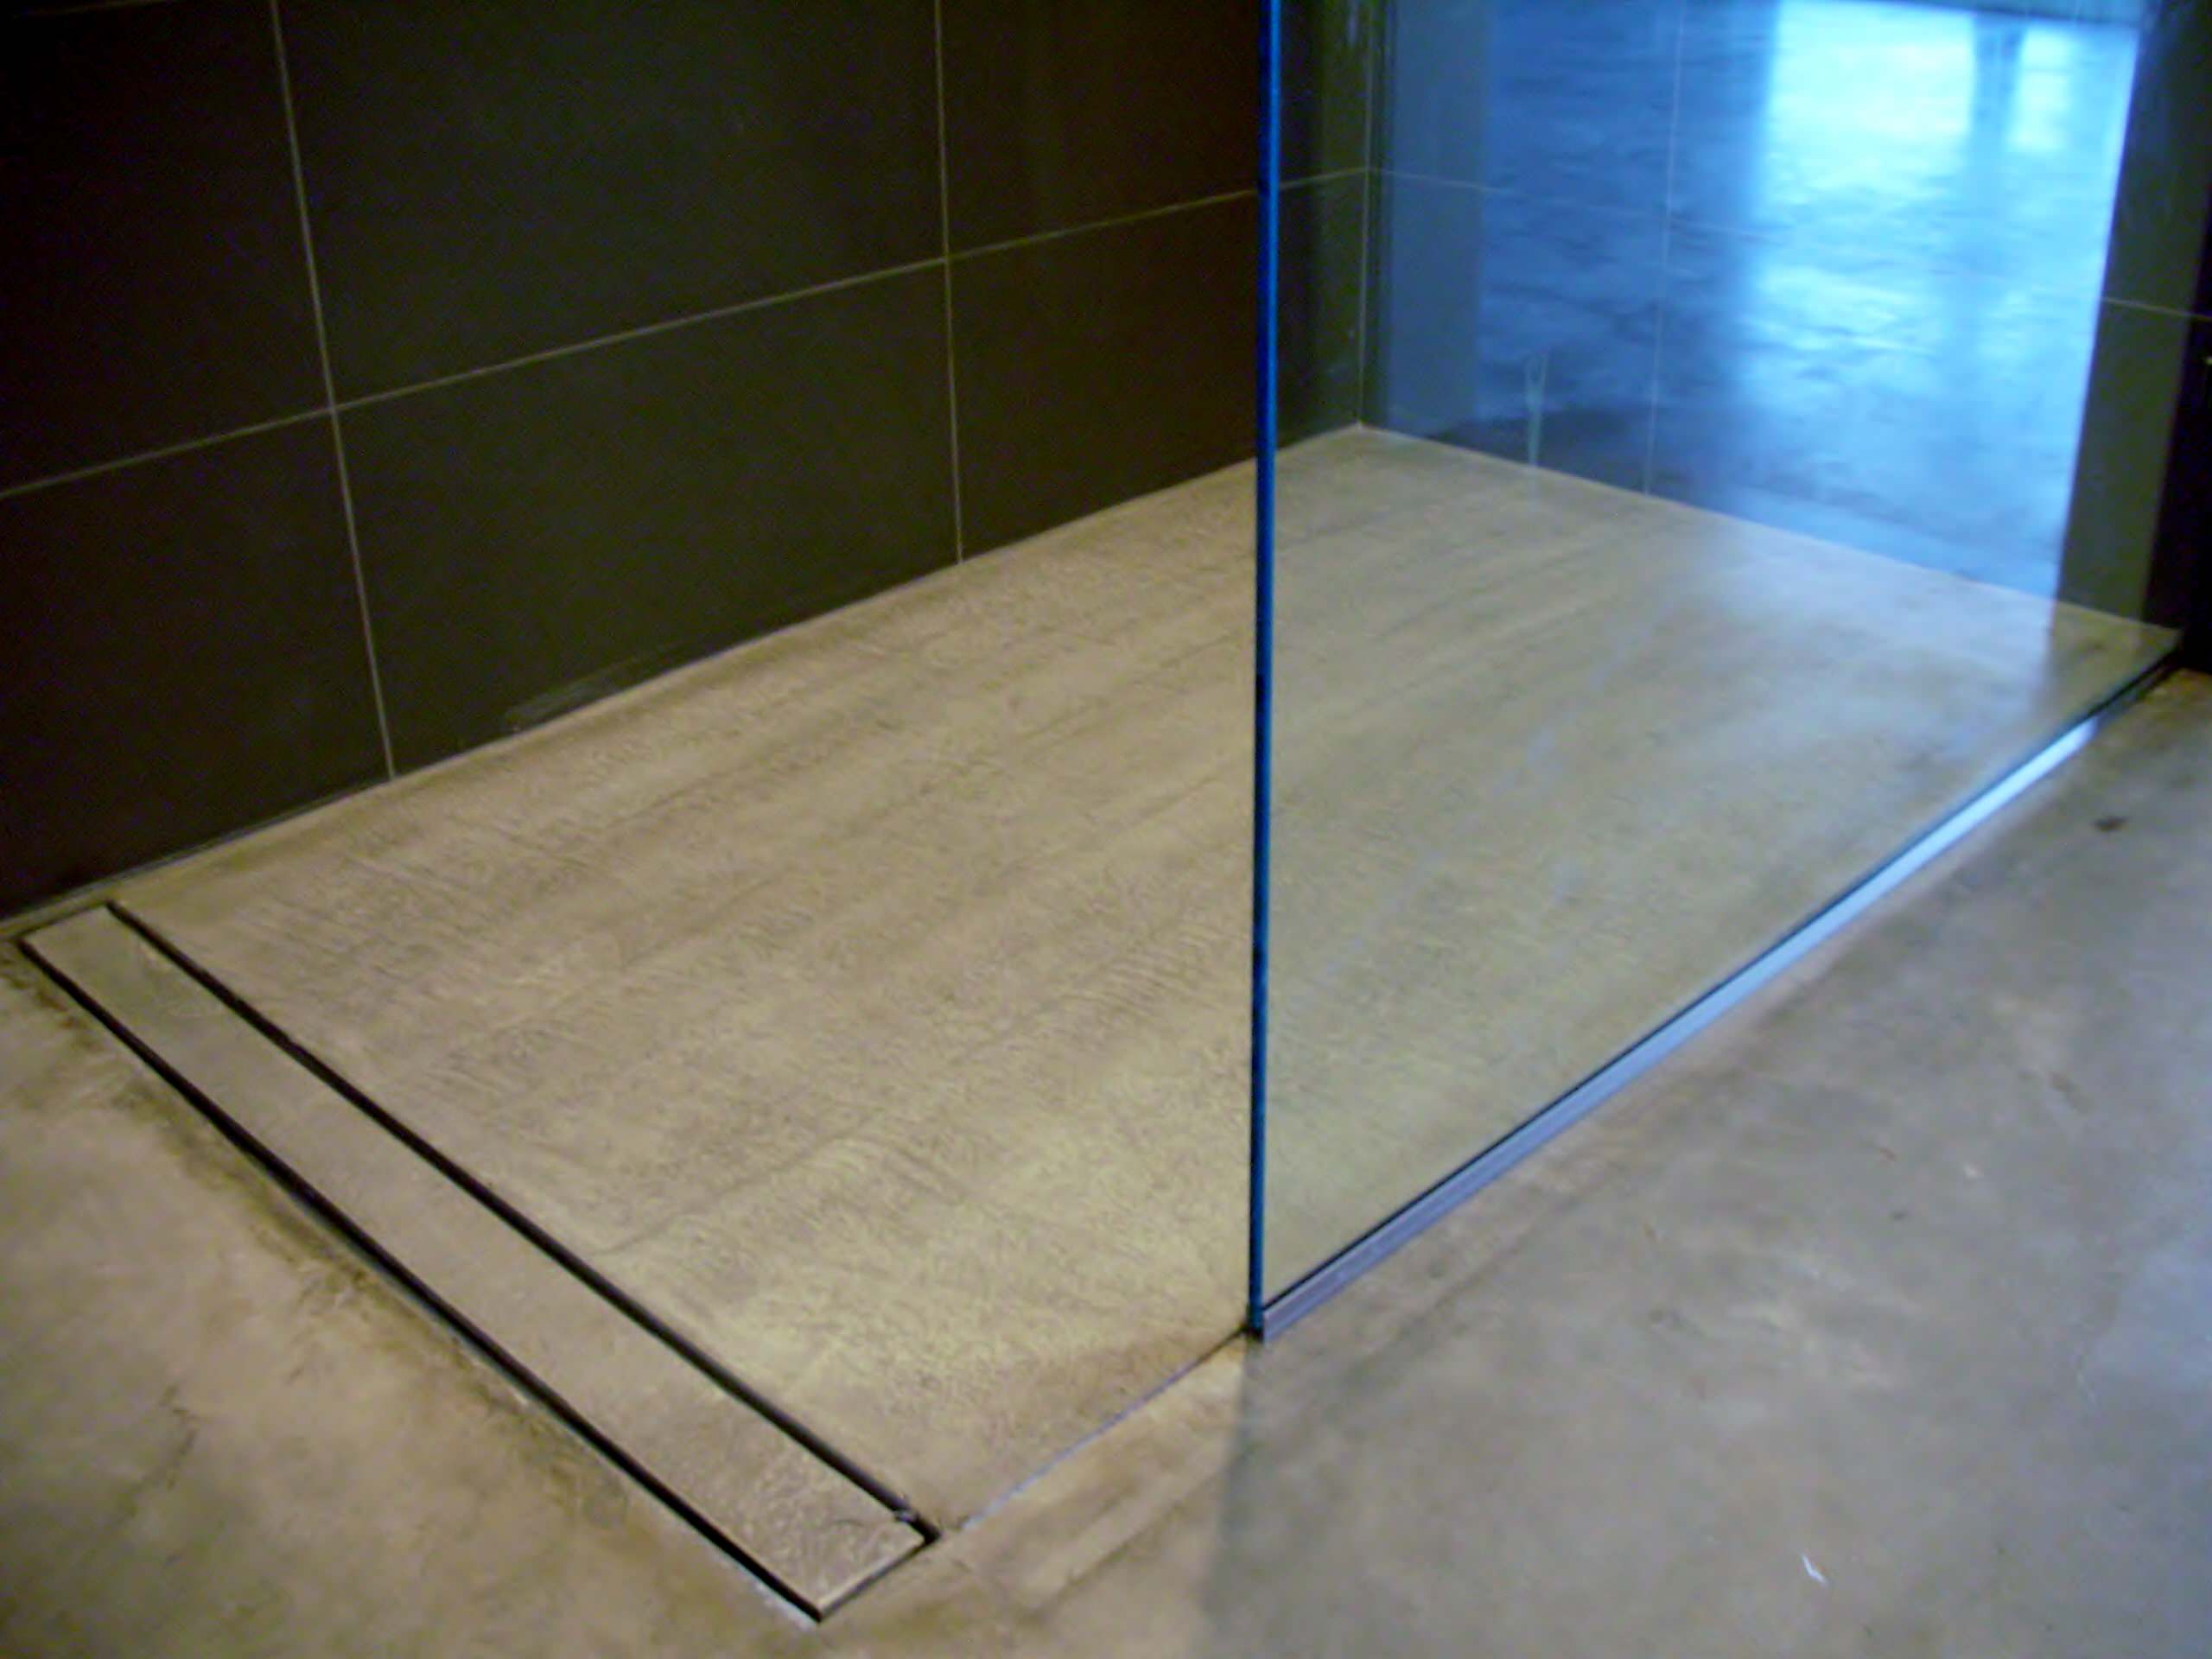 Concrete Shower Floor Houzz, Concrete Shower Floor No Tile